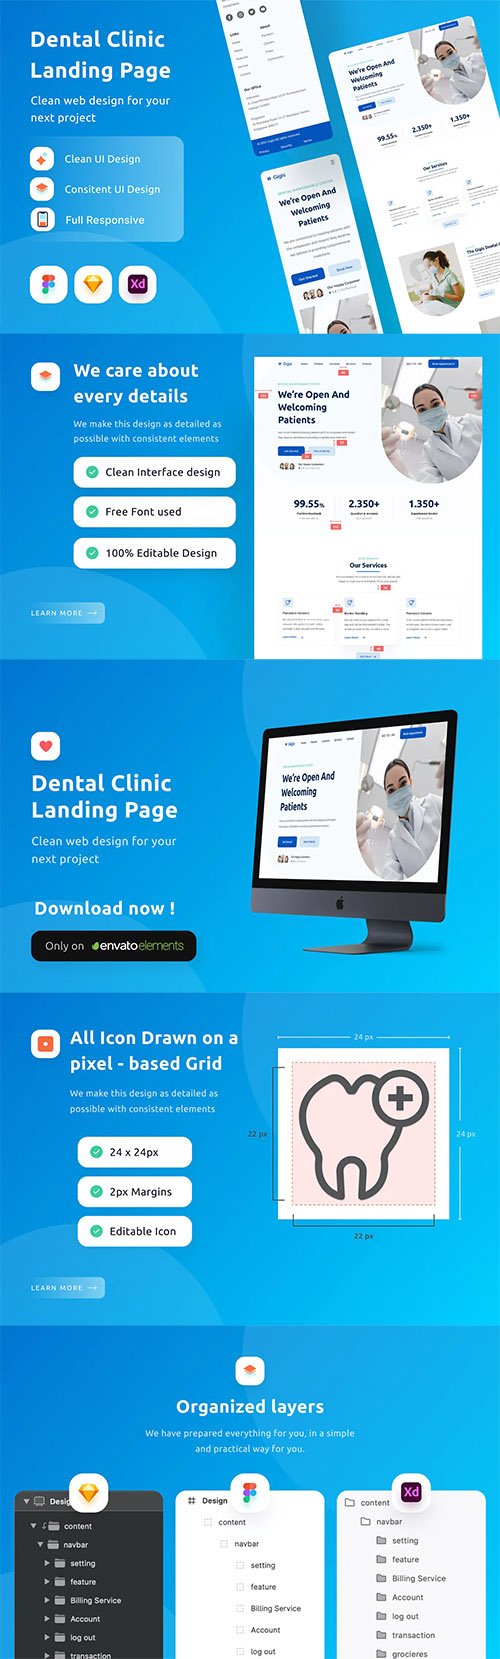 Dental Clinic Landing Page